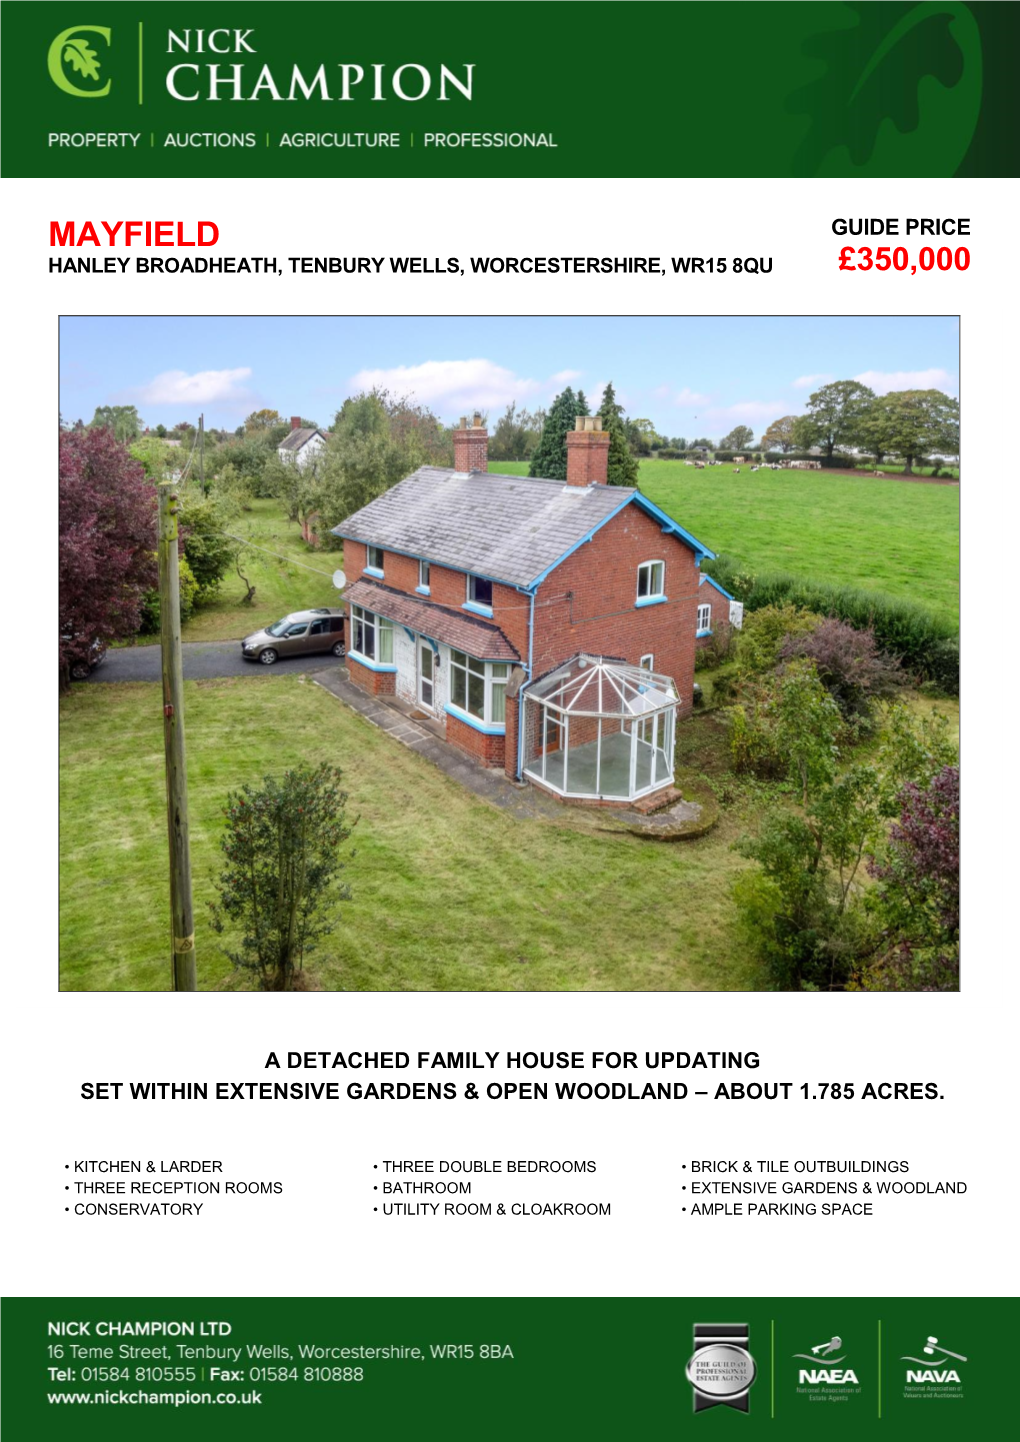 Mayfield Guide Price Hanley Broadheath, Tenbury Wells, Worcestershire, Wr15 8Qu £350,000